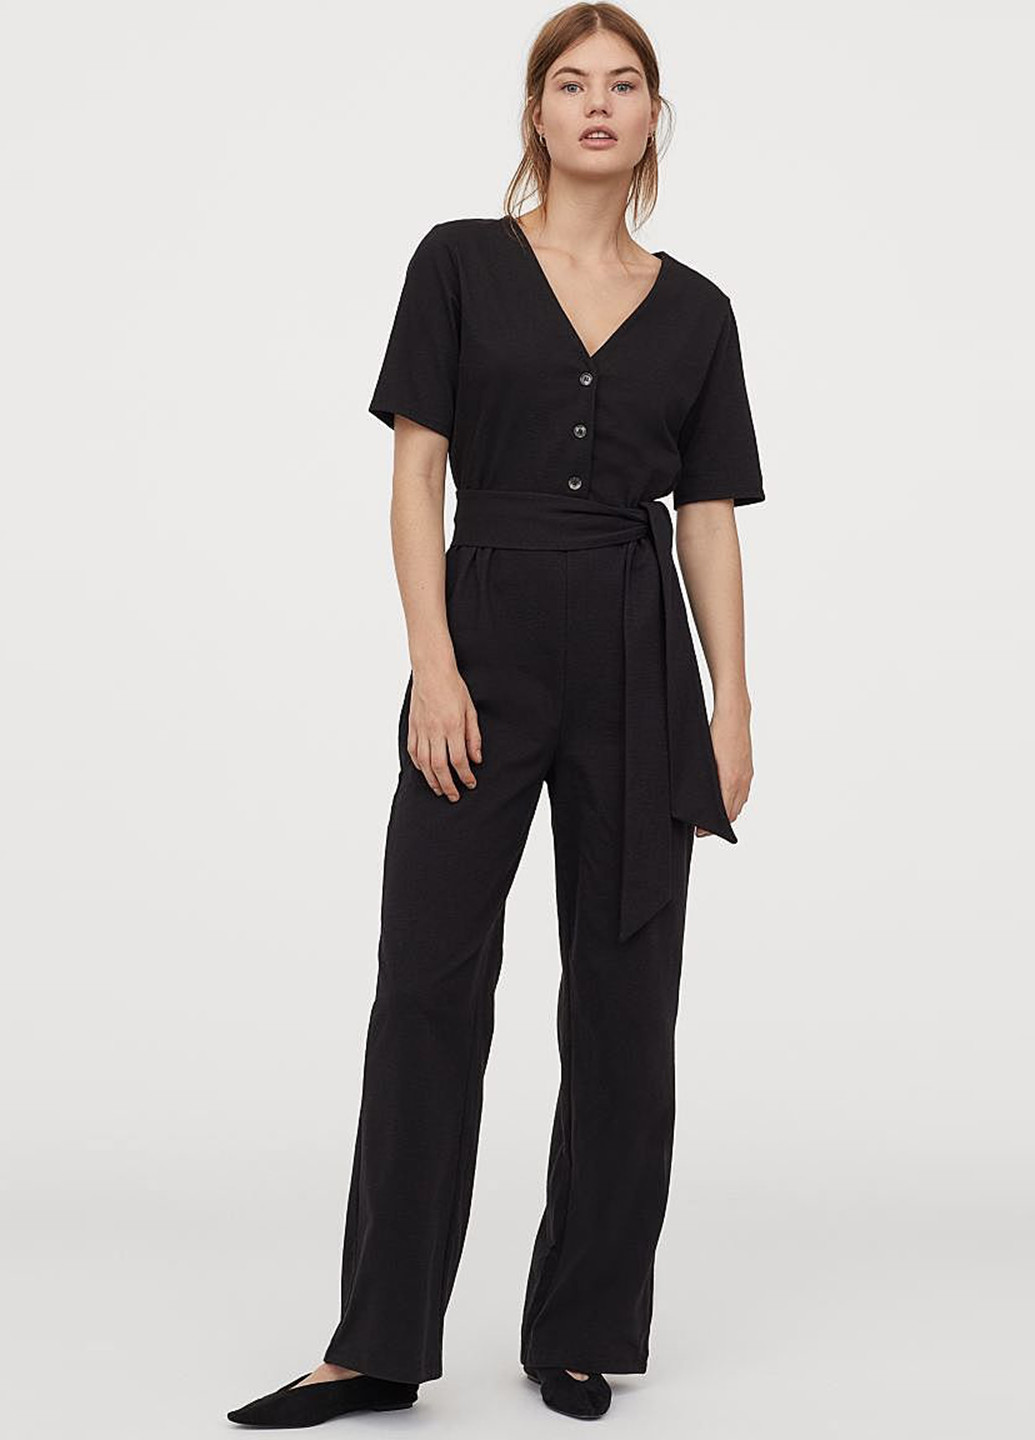 Комбинезон H&M комбинезон-брюки однотонный чёрный кэжуал трикотаж